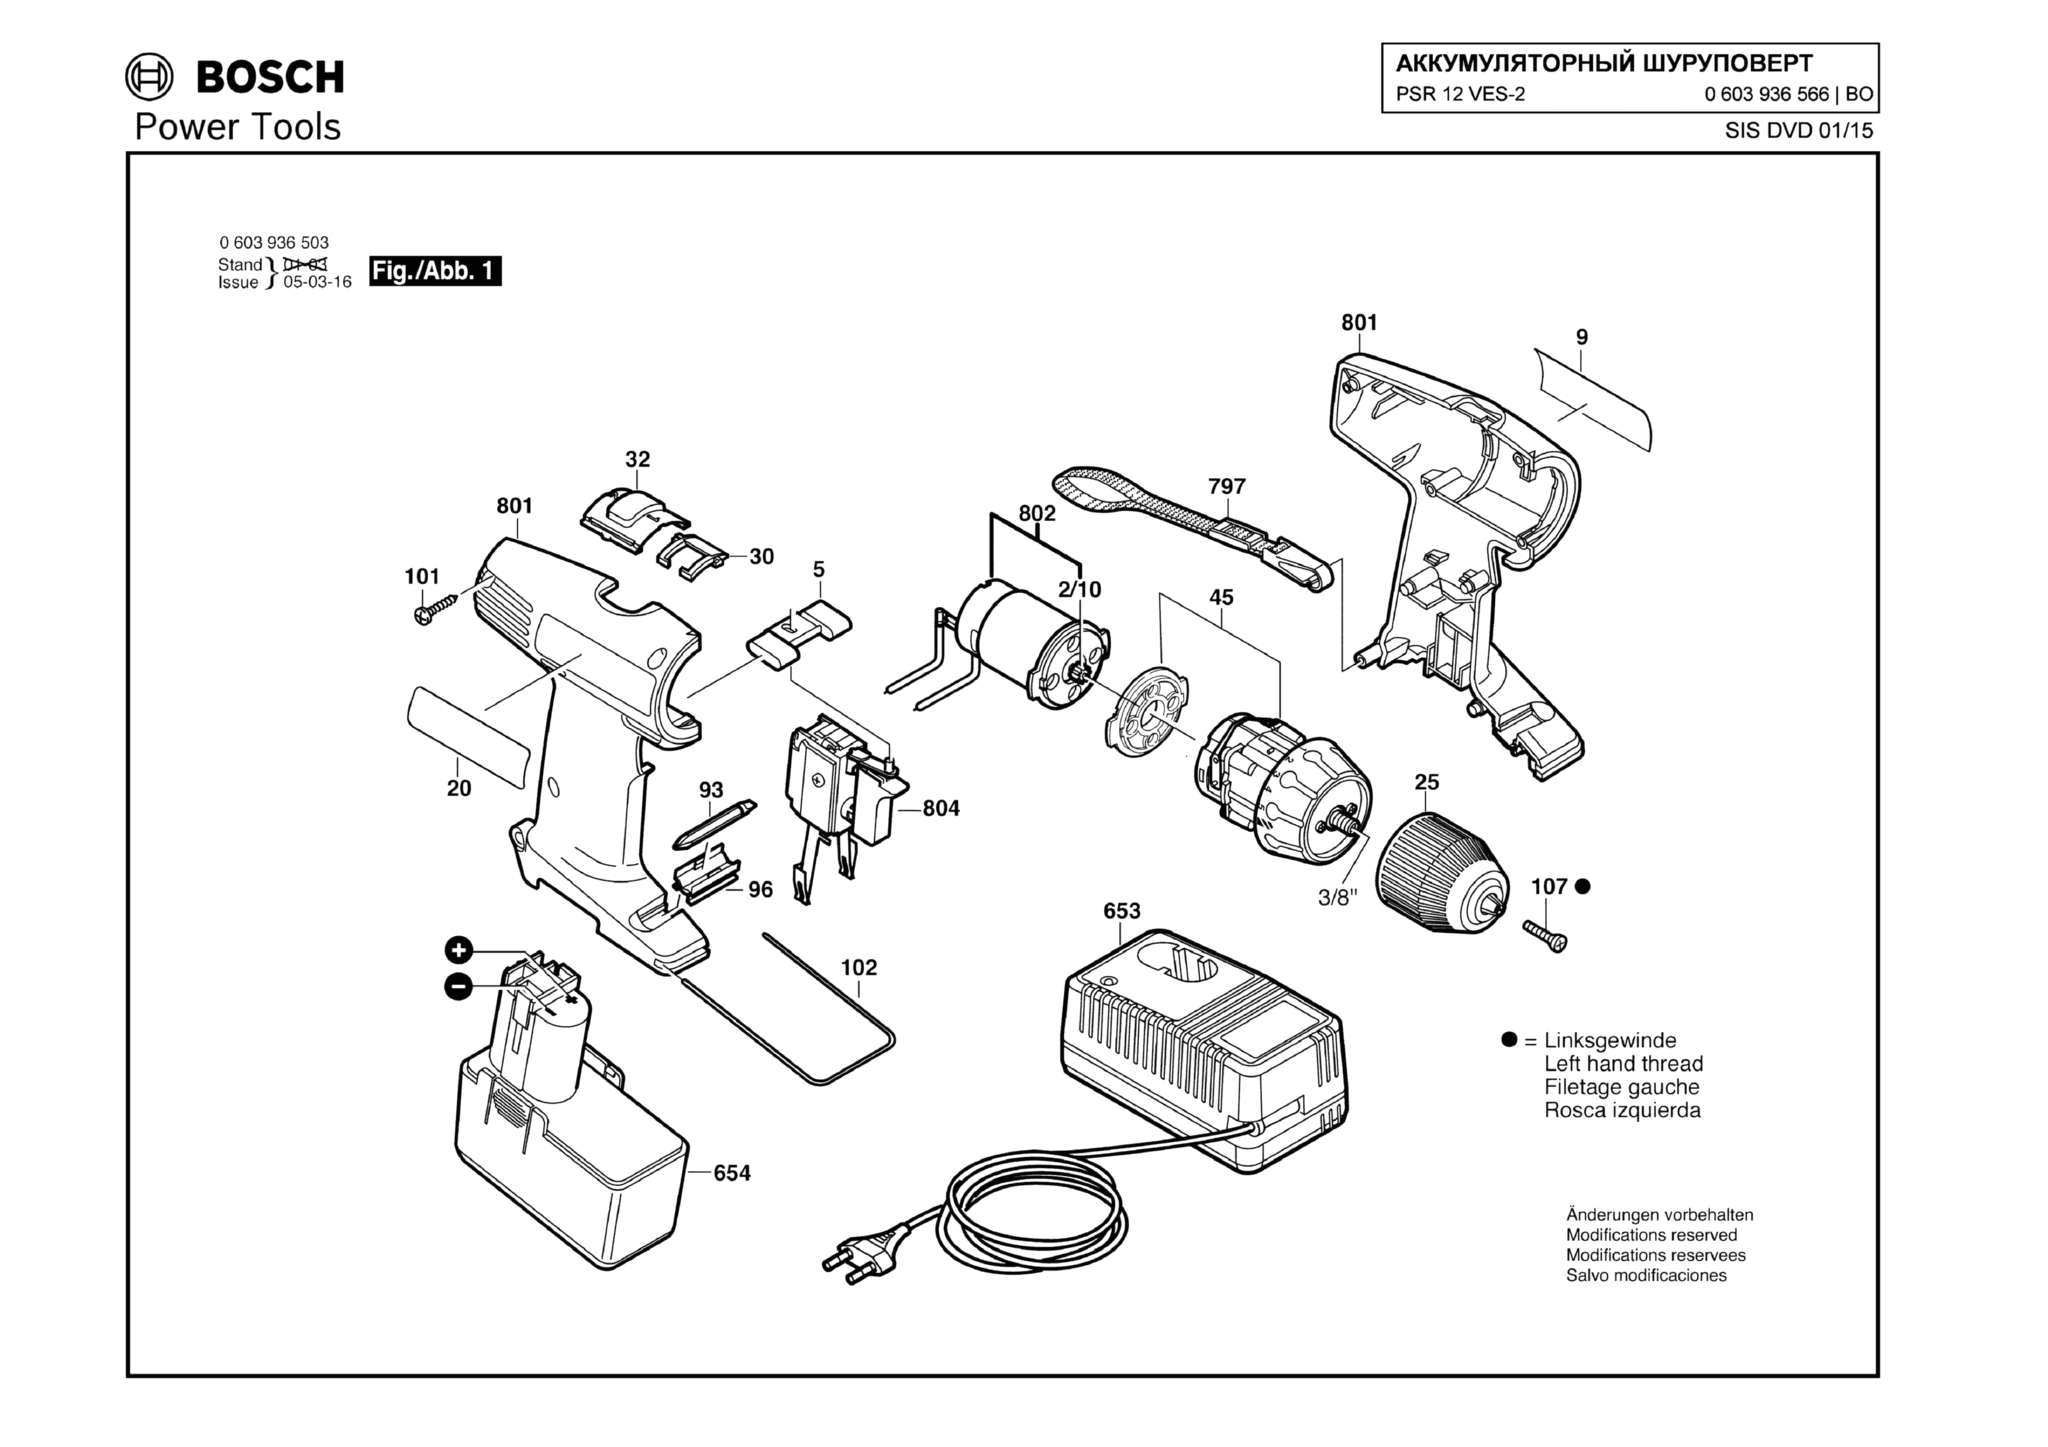 Запчасти, схема и деталировка Bosch PSR 12 VES-2 (ТИП 0603936566)